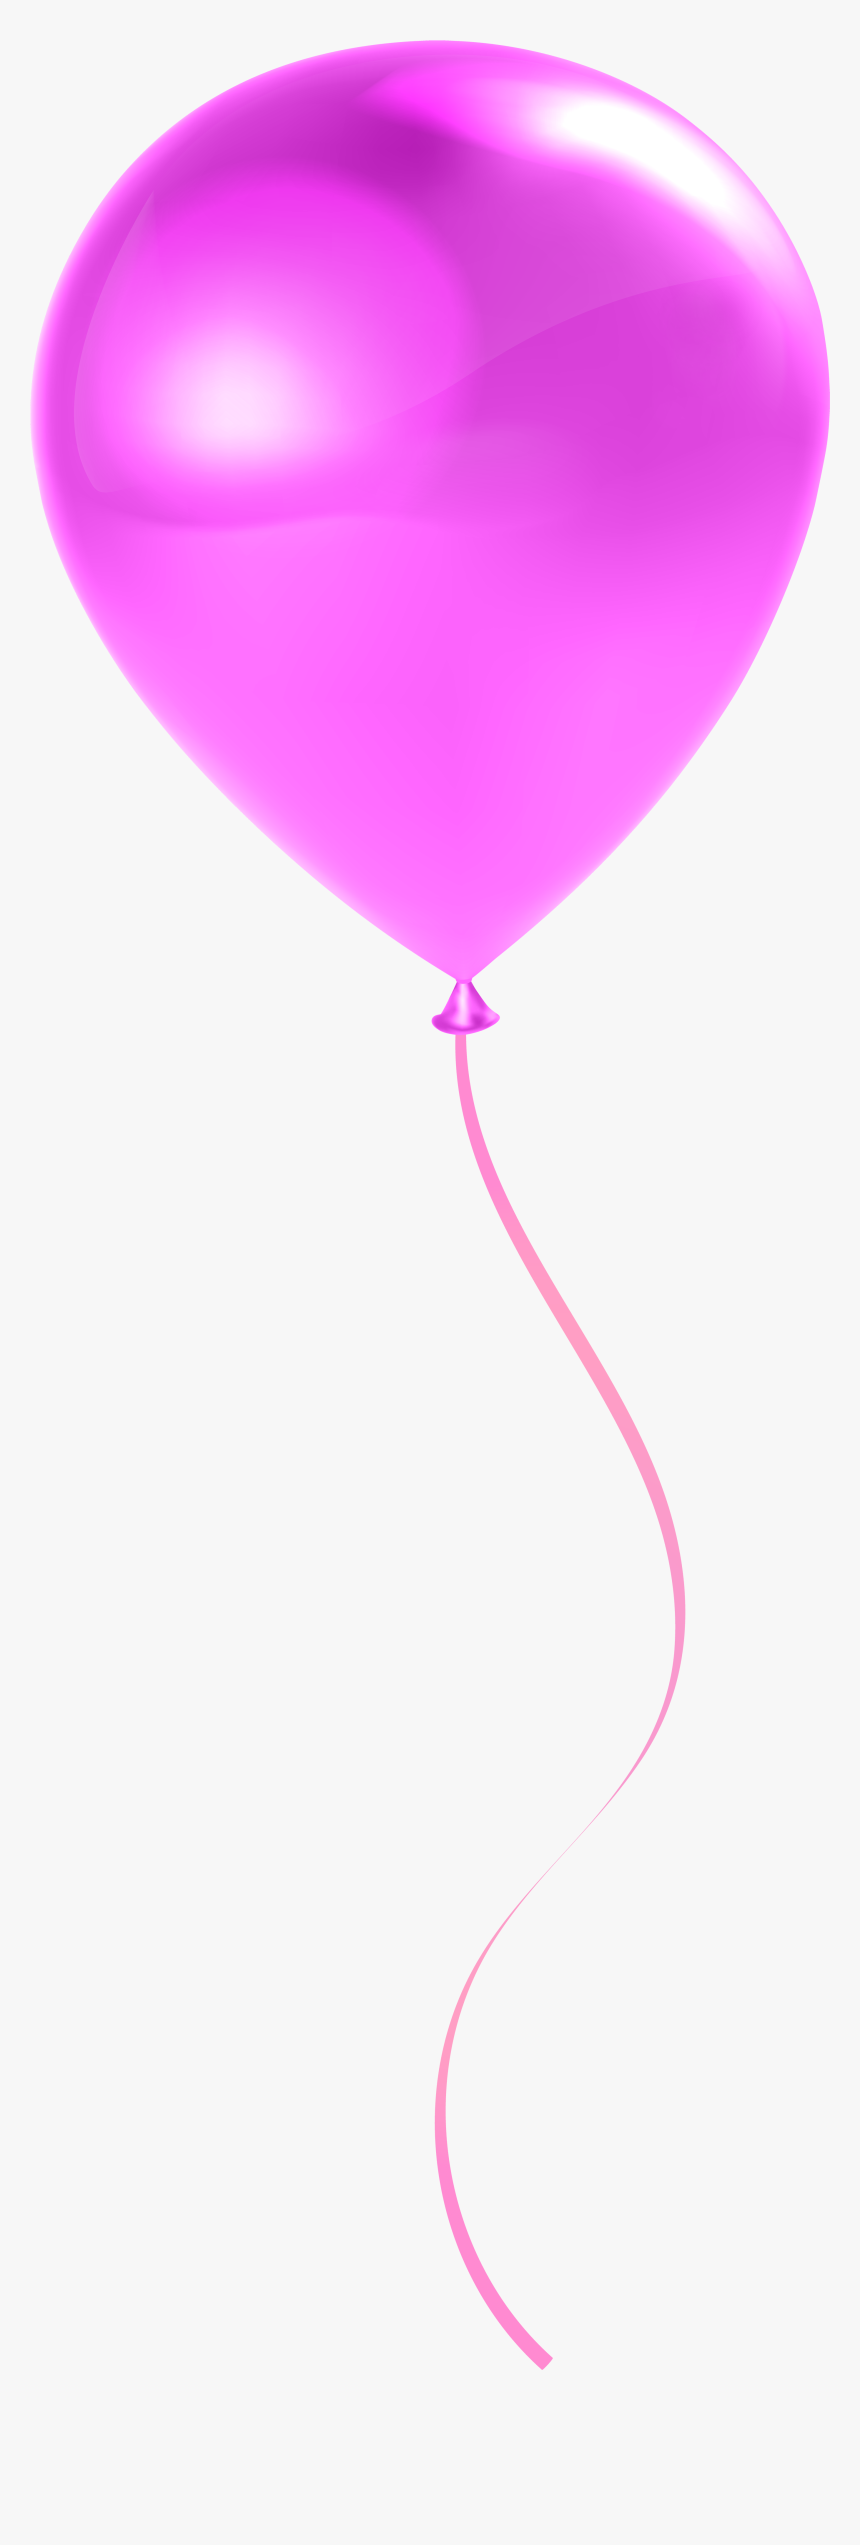 Single Png Pink Balloon Transparent Clip Art - Single Balloon Clipart Transparent, Png Download, Free Download